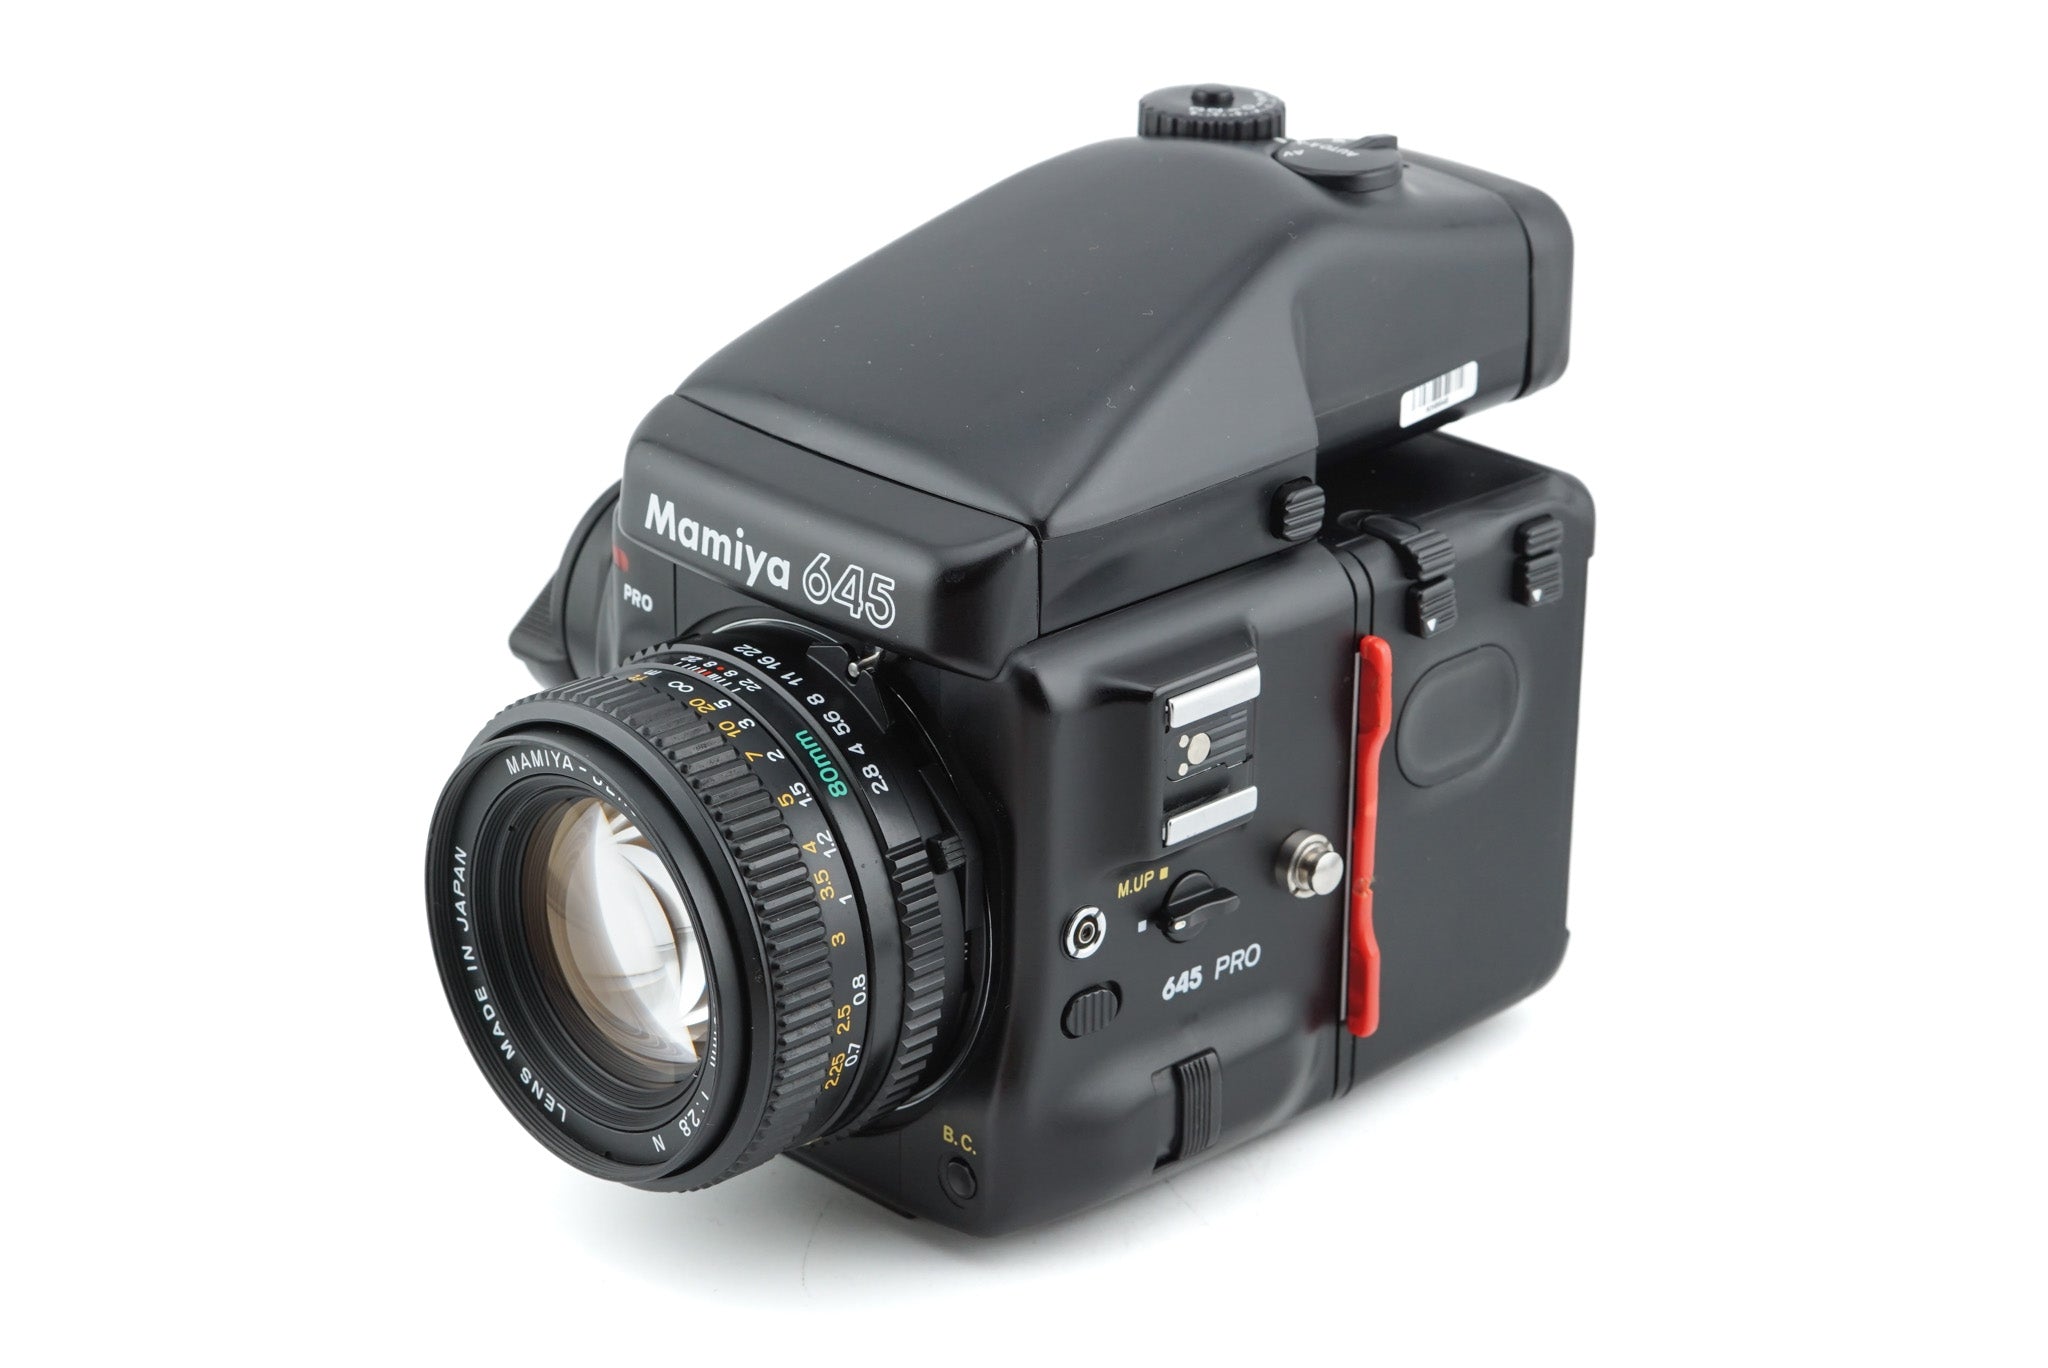 Mamiya 645 Pro - Camera